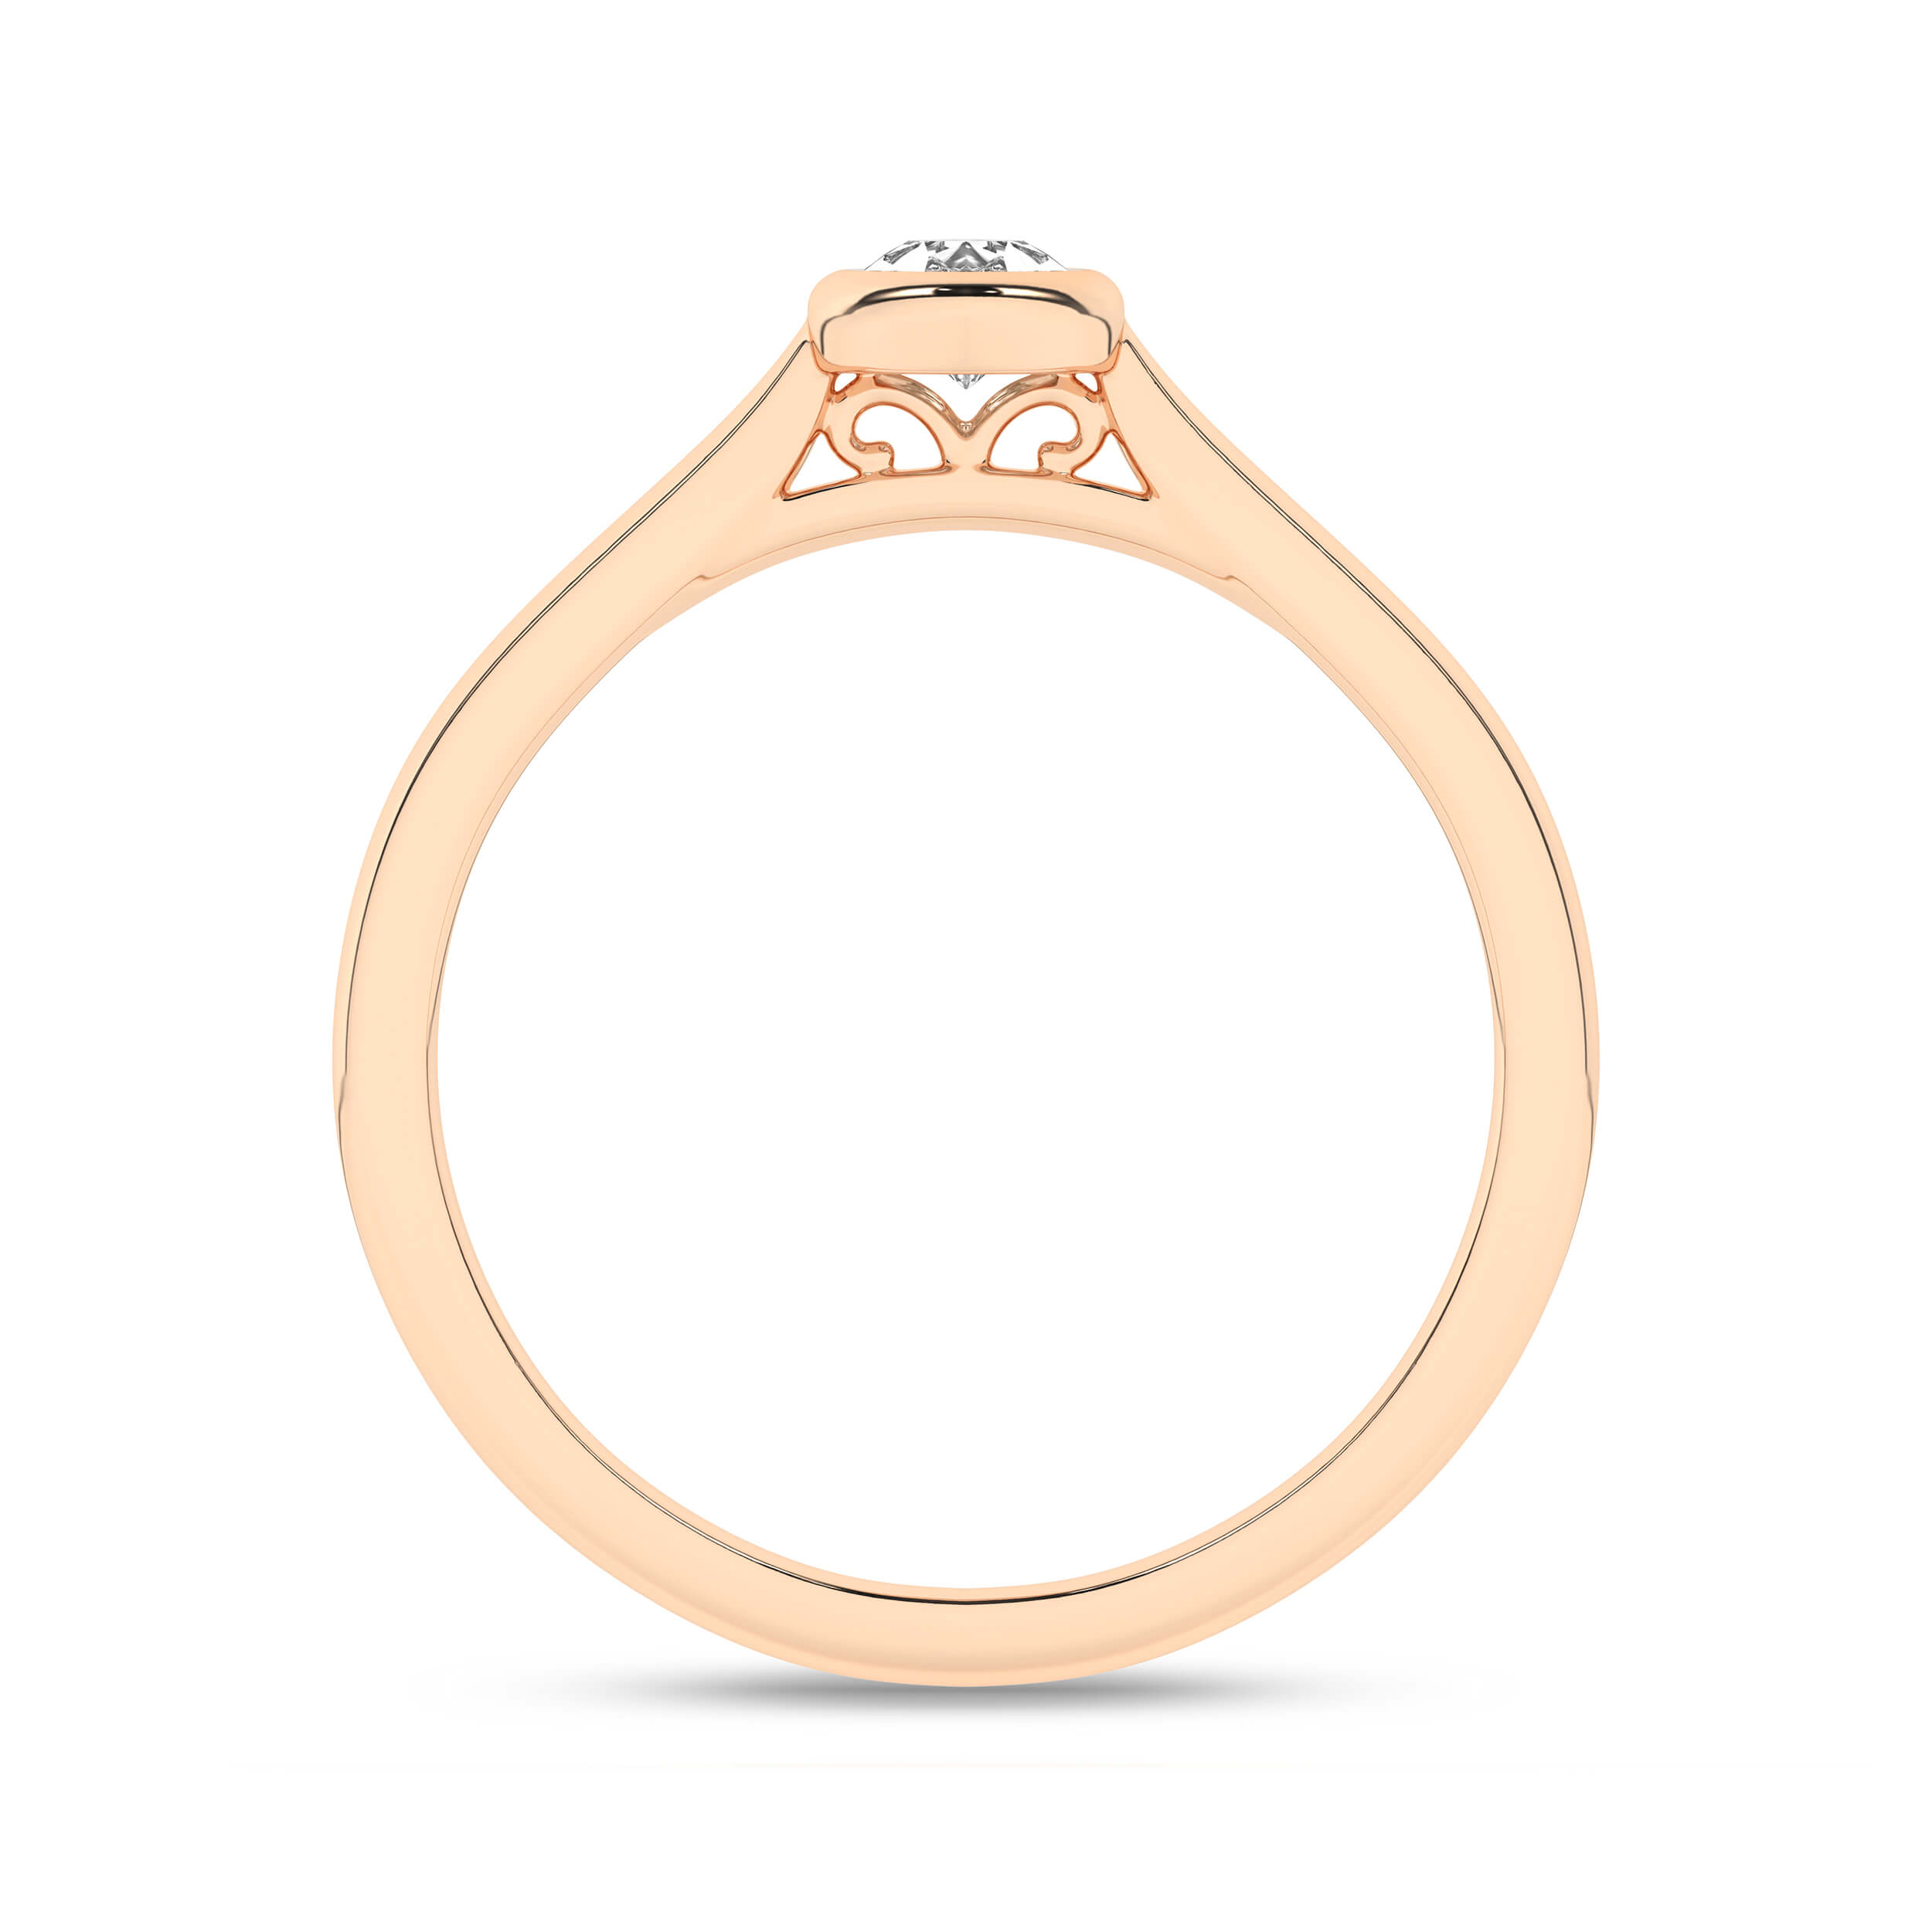 Inel de logodna din Aur Roz 14K cu Diamant 0.33Ct, articol RS0577, previzualizare foto 2